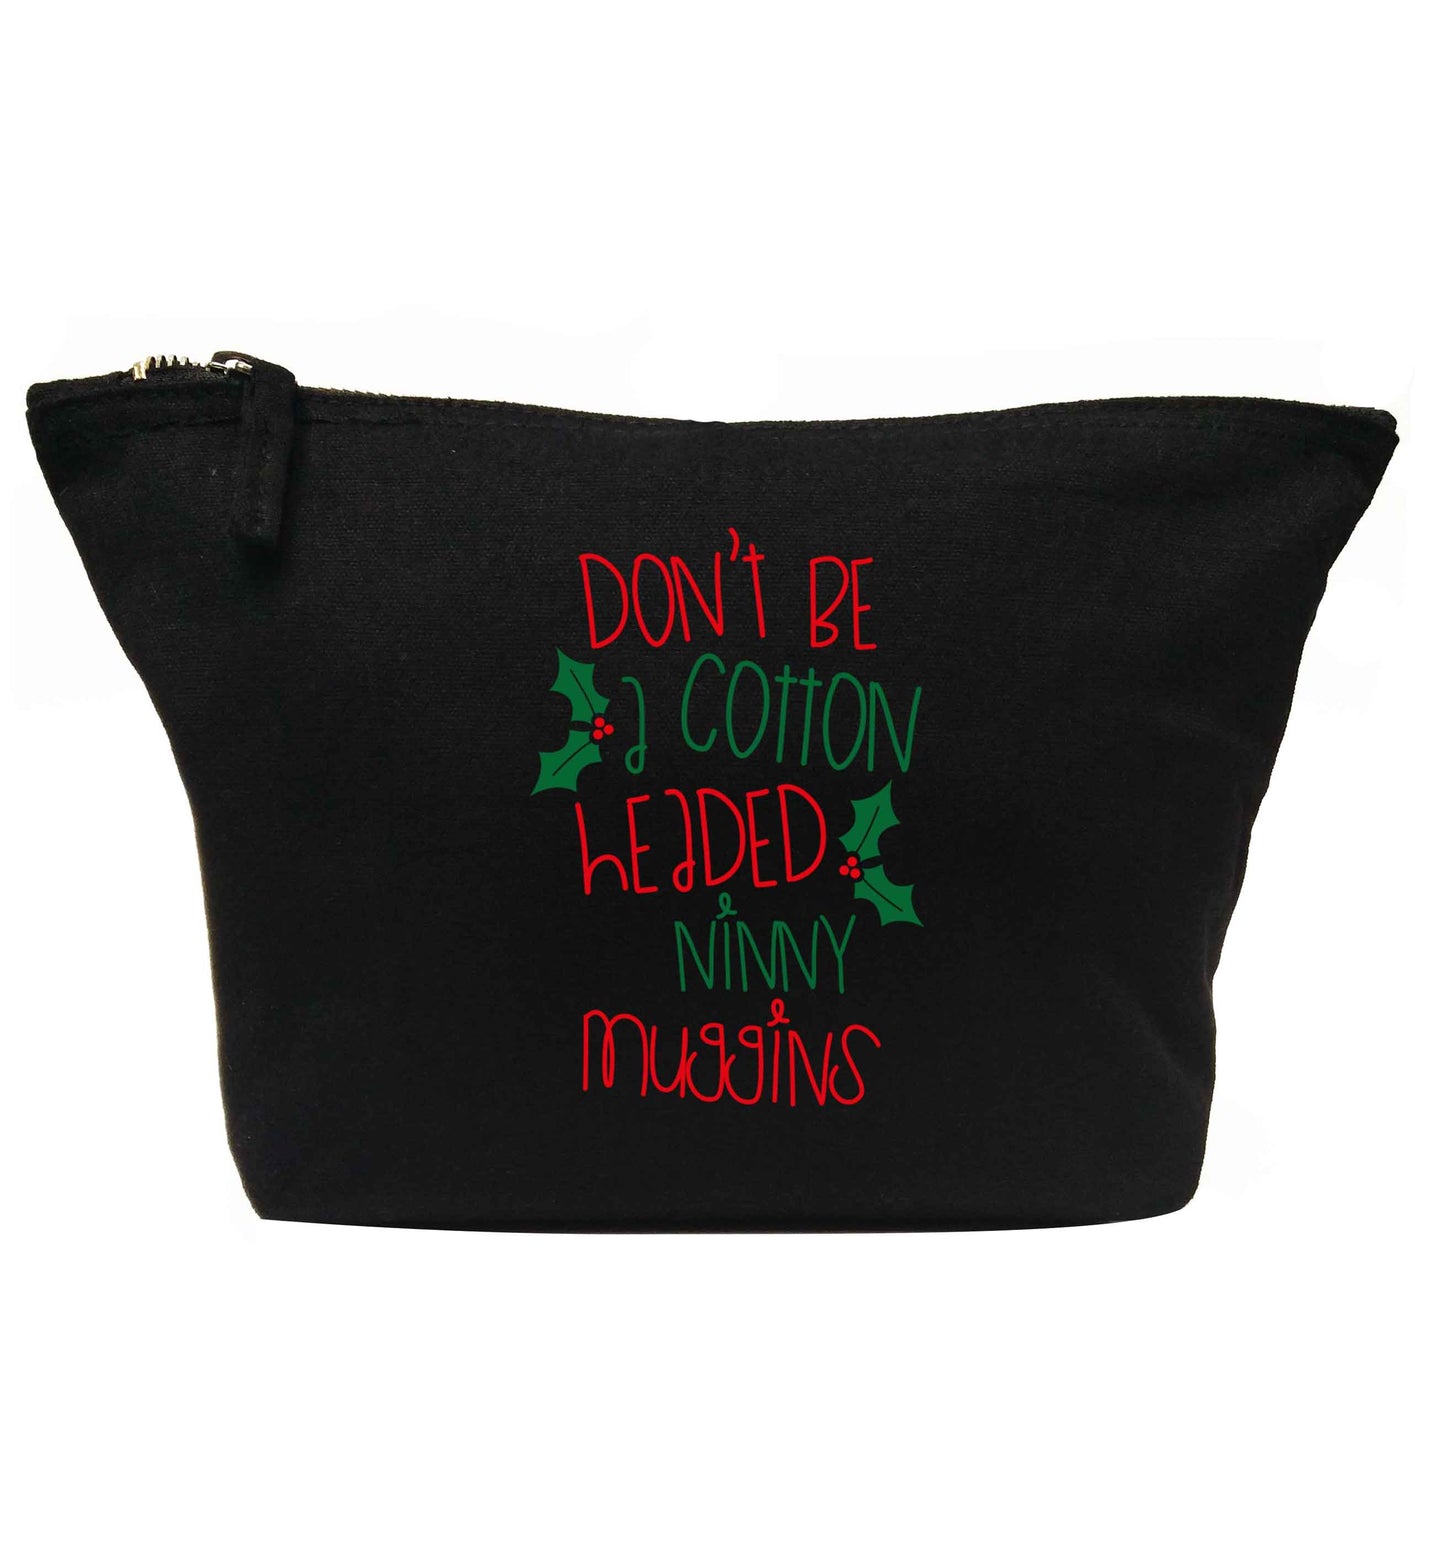 Don't be a cotton headed ninny muggins | Makeup / wash bag